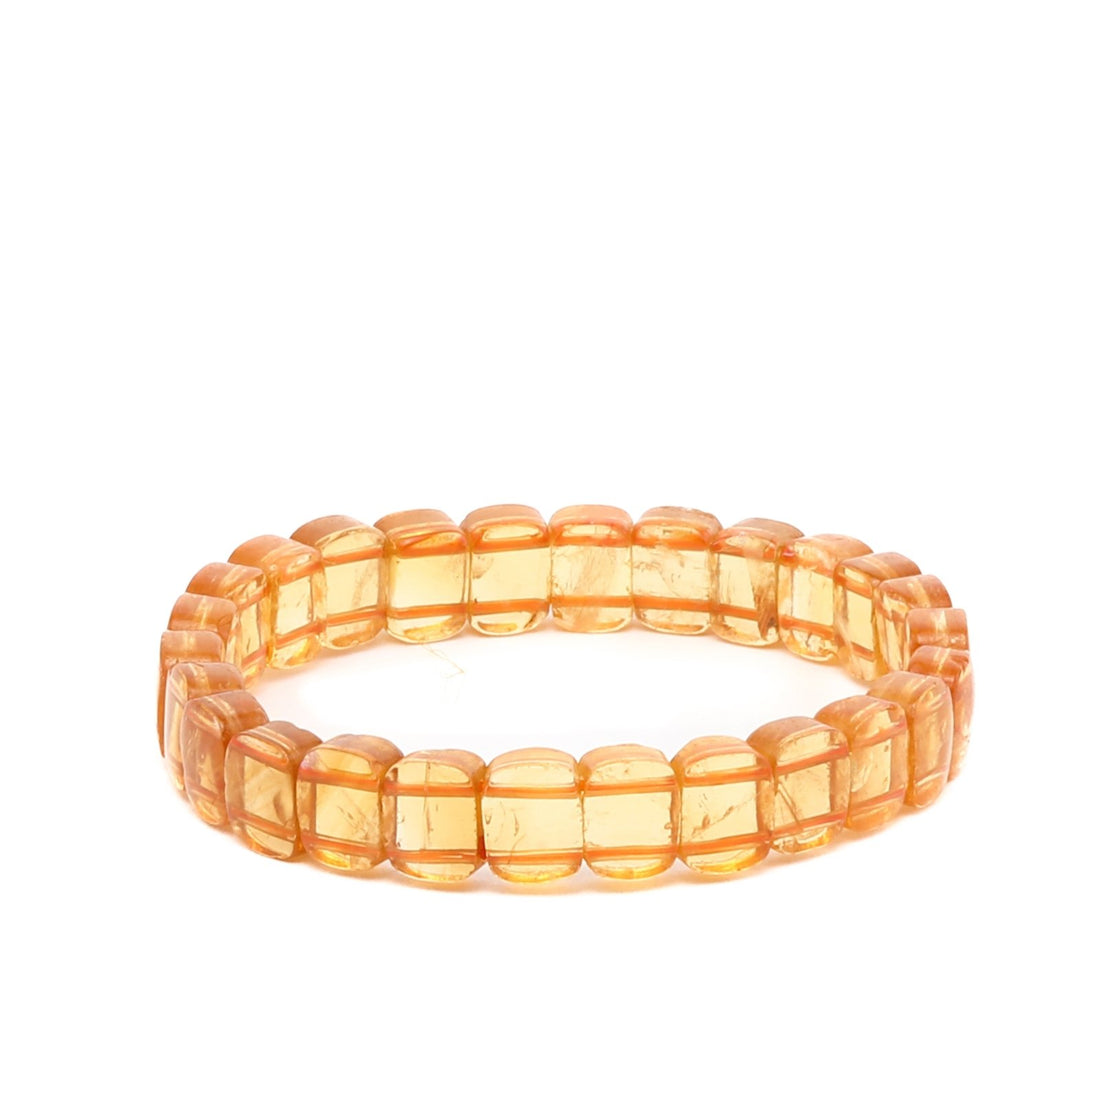 Citrine Bracelet - Ele Keats Jewelry